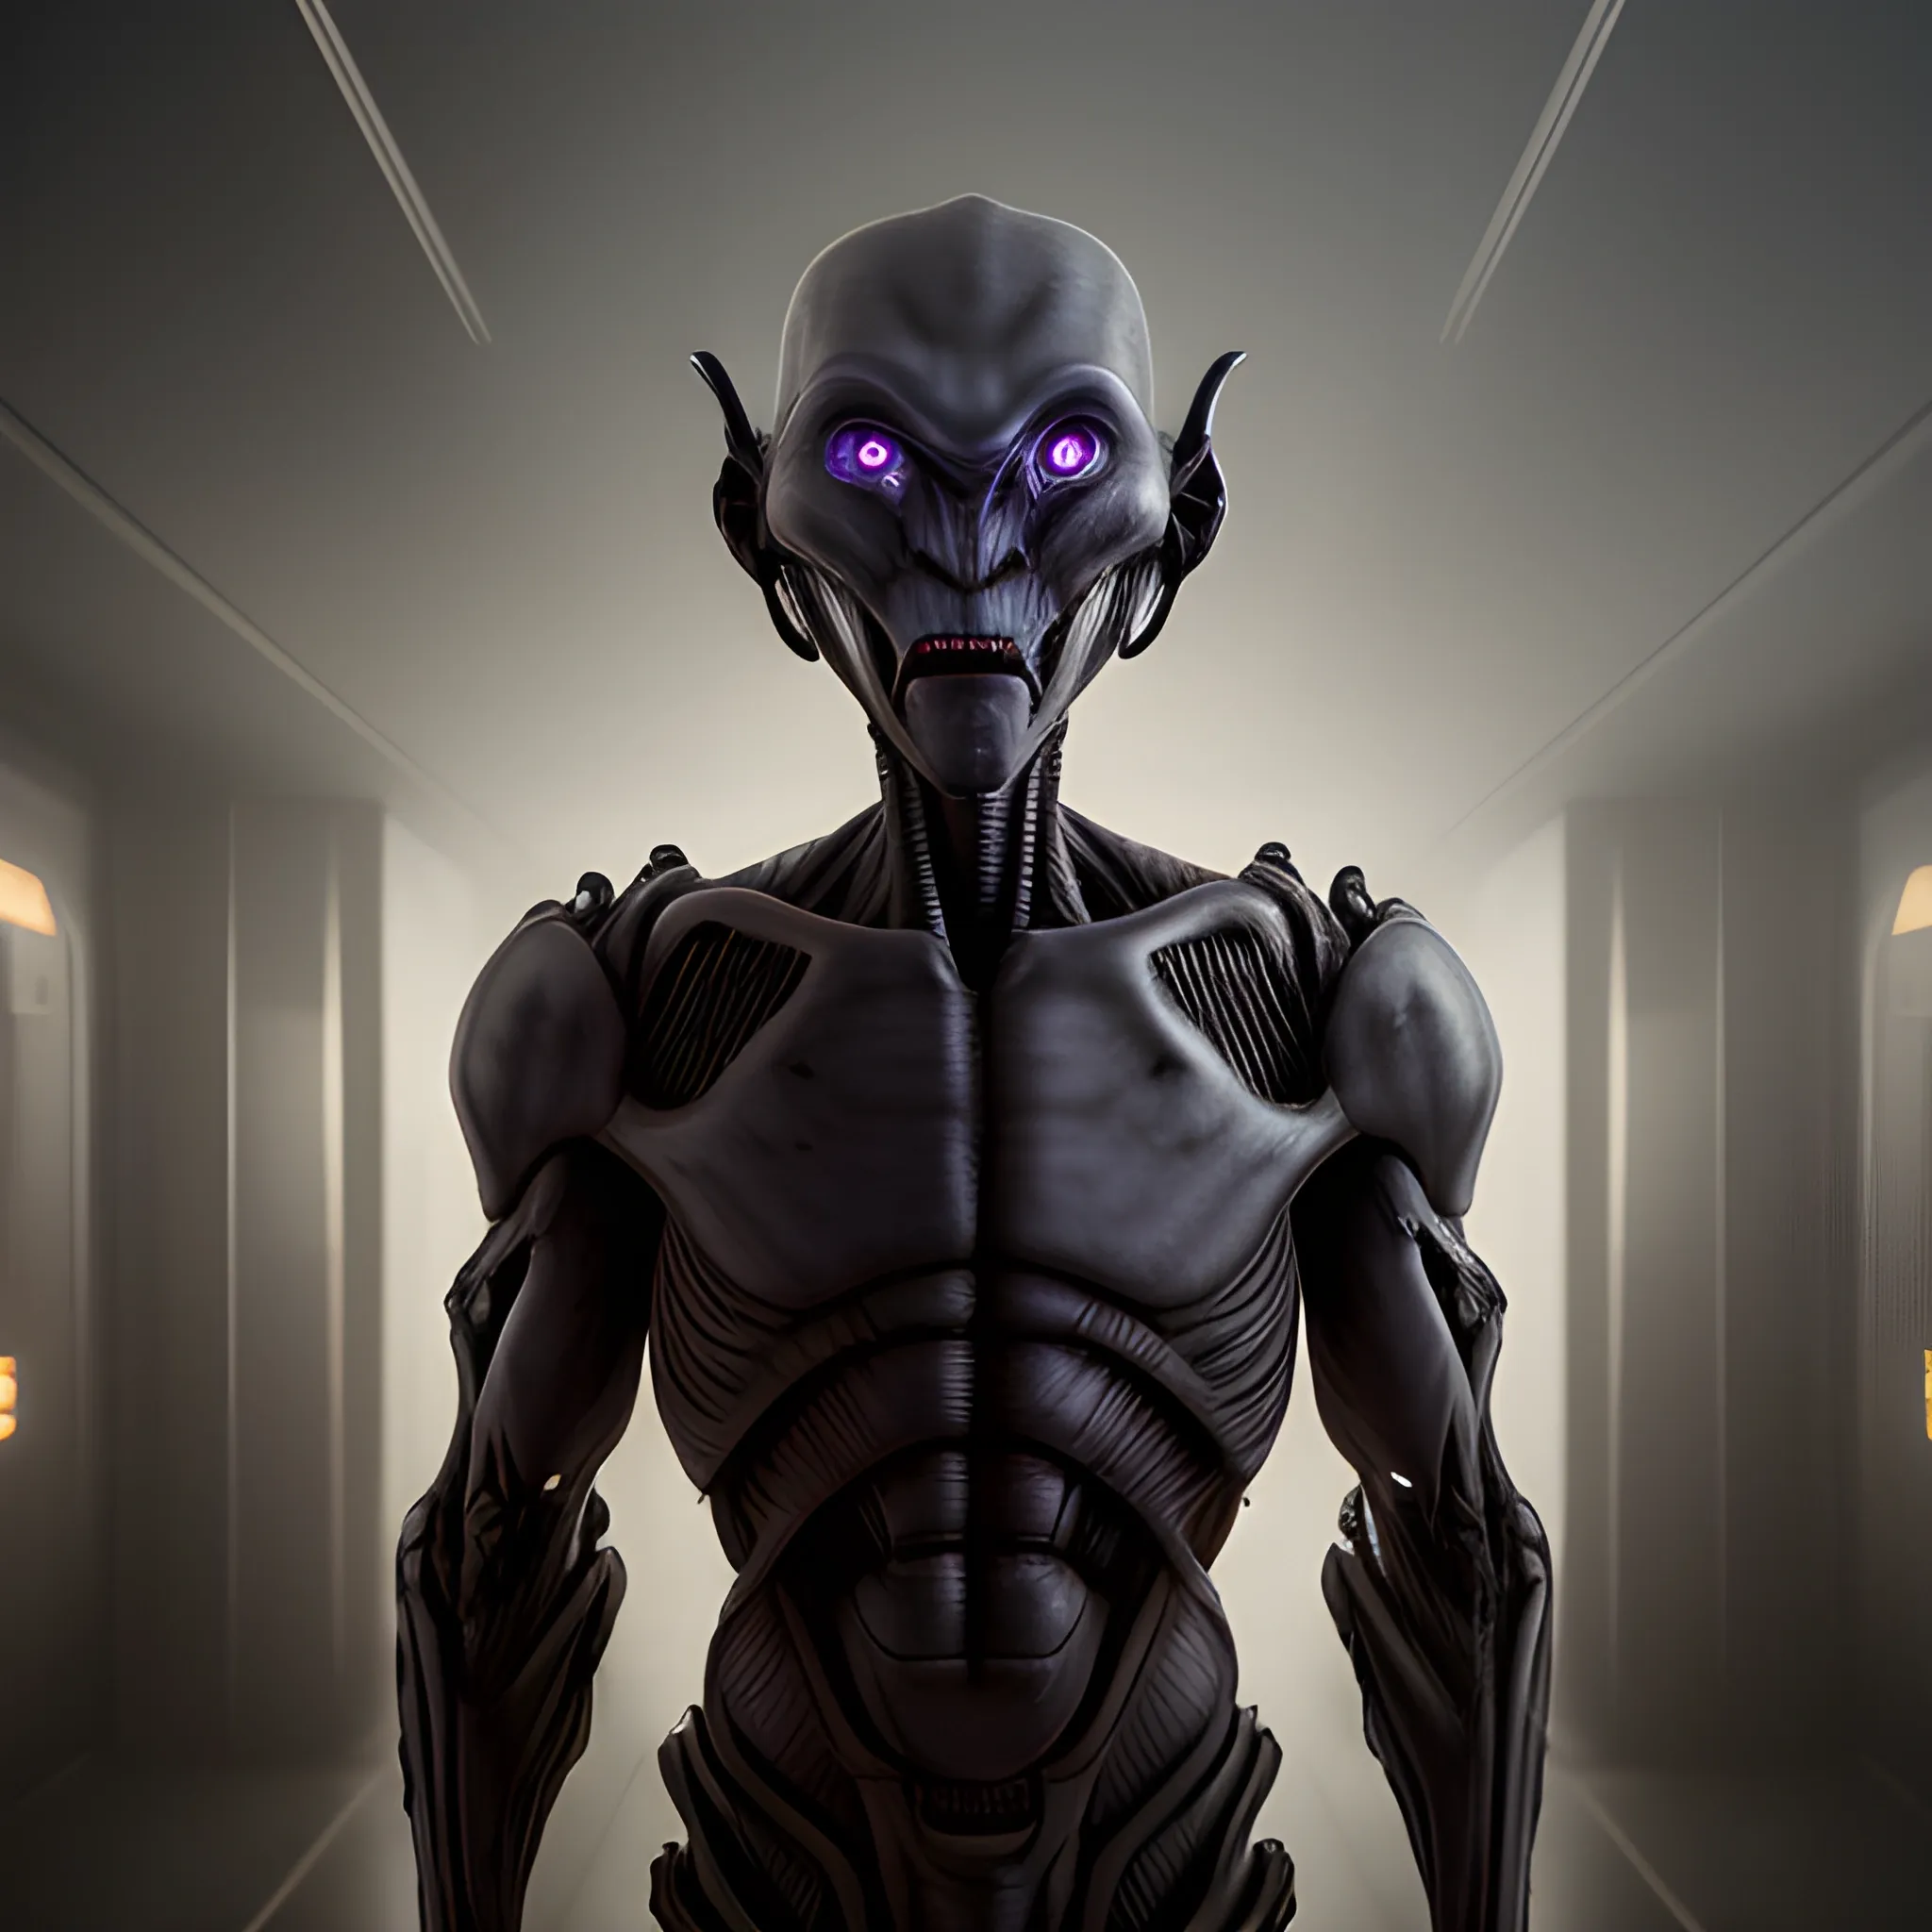 A high resolution, cinematic photo of a dark humanoid alien engineer